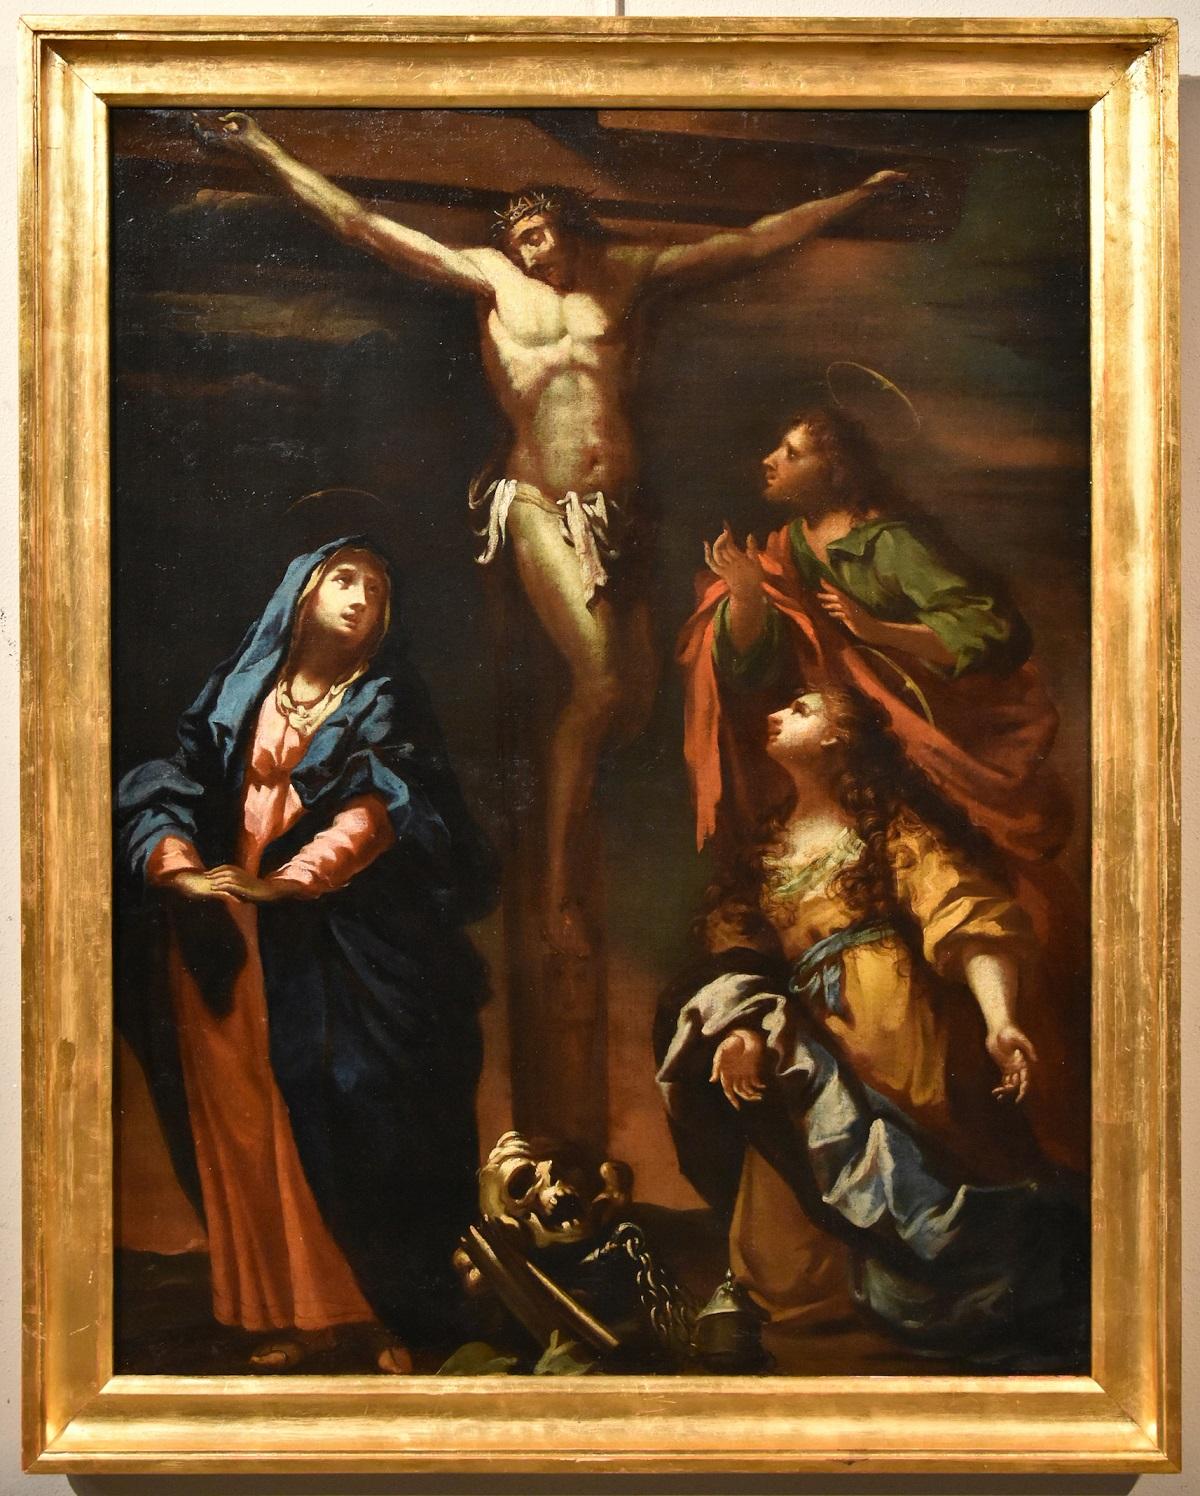  Giovanni Camillo Sagrestani (Florence, 1660 - 1731) Landscape Painting - Christ Crucified Sagrestani Paint Oil on canvas Old master 17/18th Century Italy